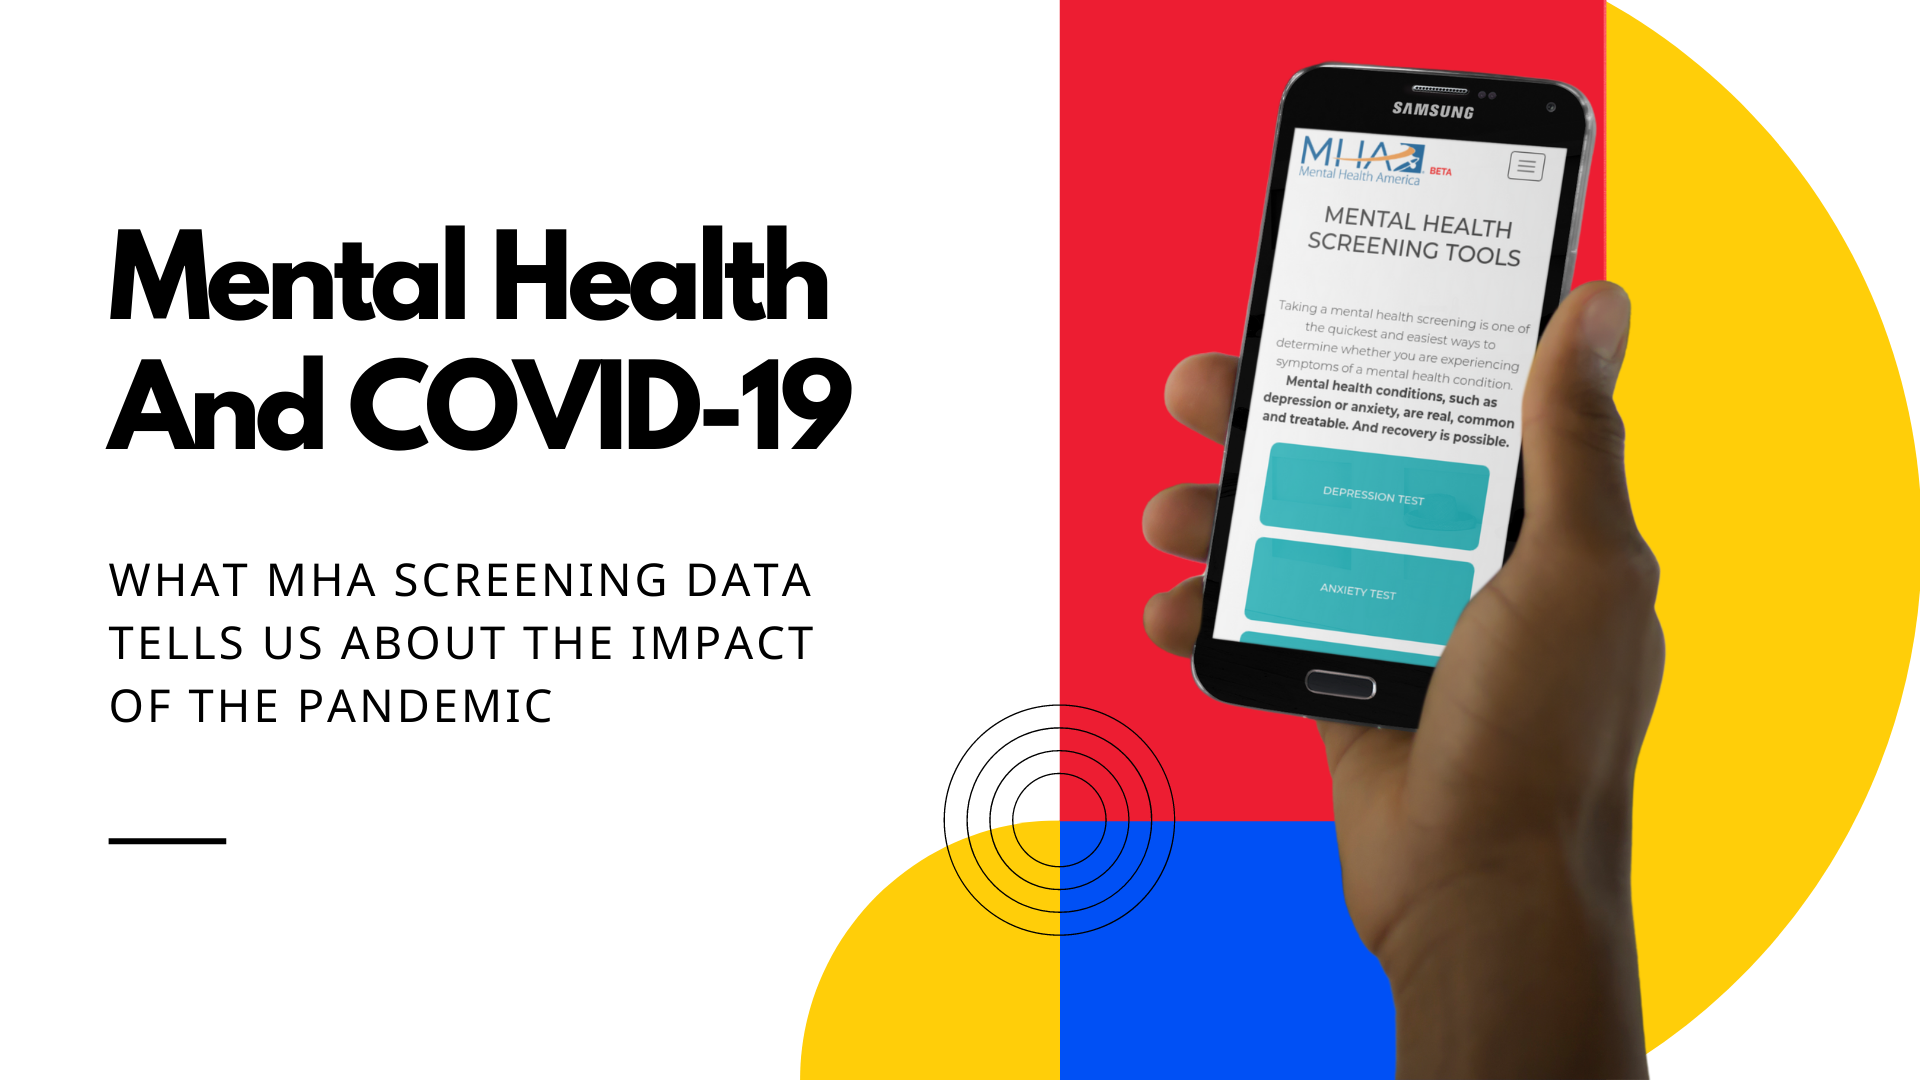 Mental Health and COVID-19 Screening Data 2020